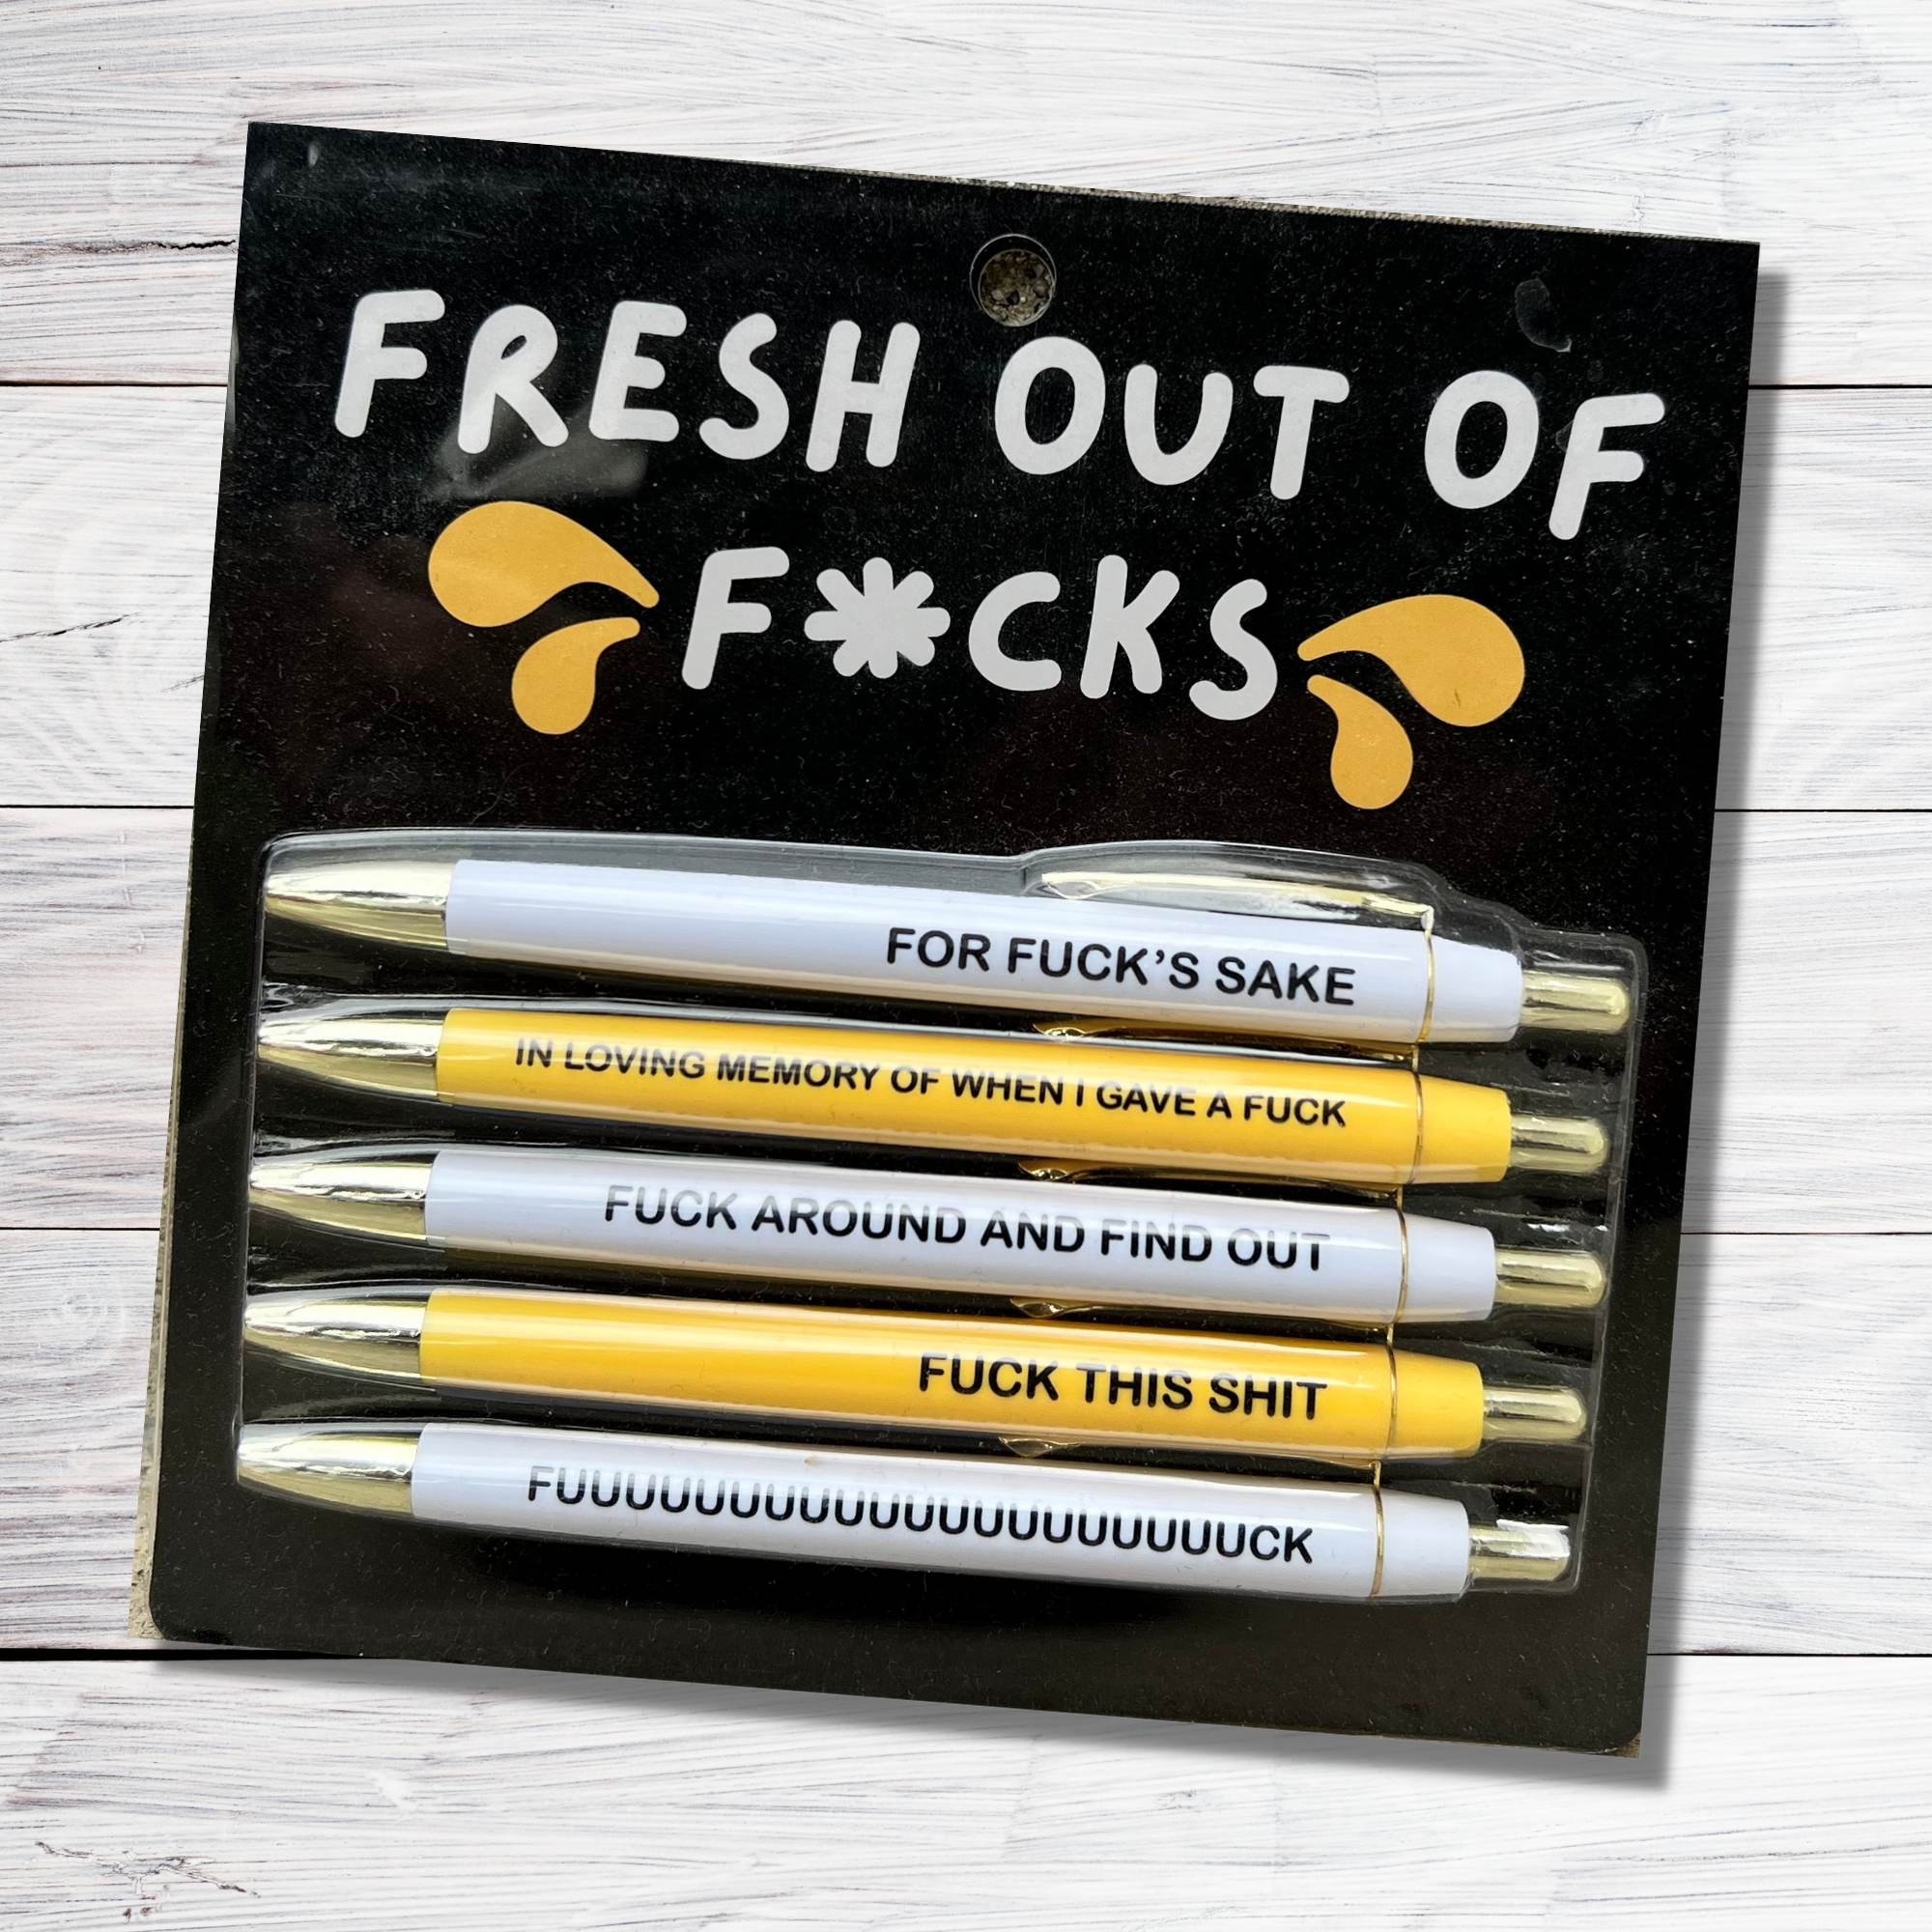 Fck It All Pen Set 